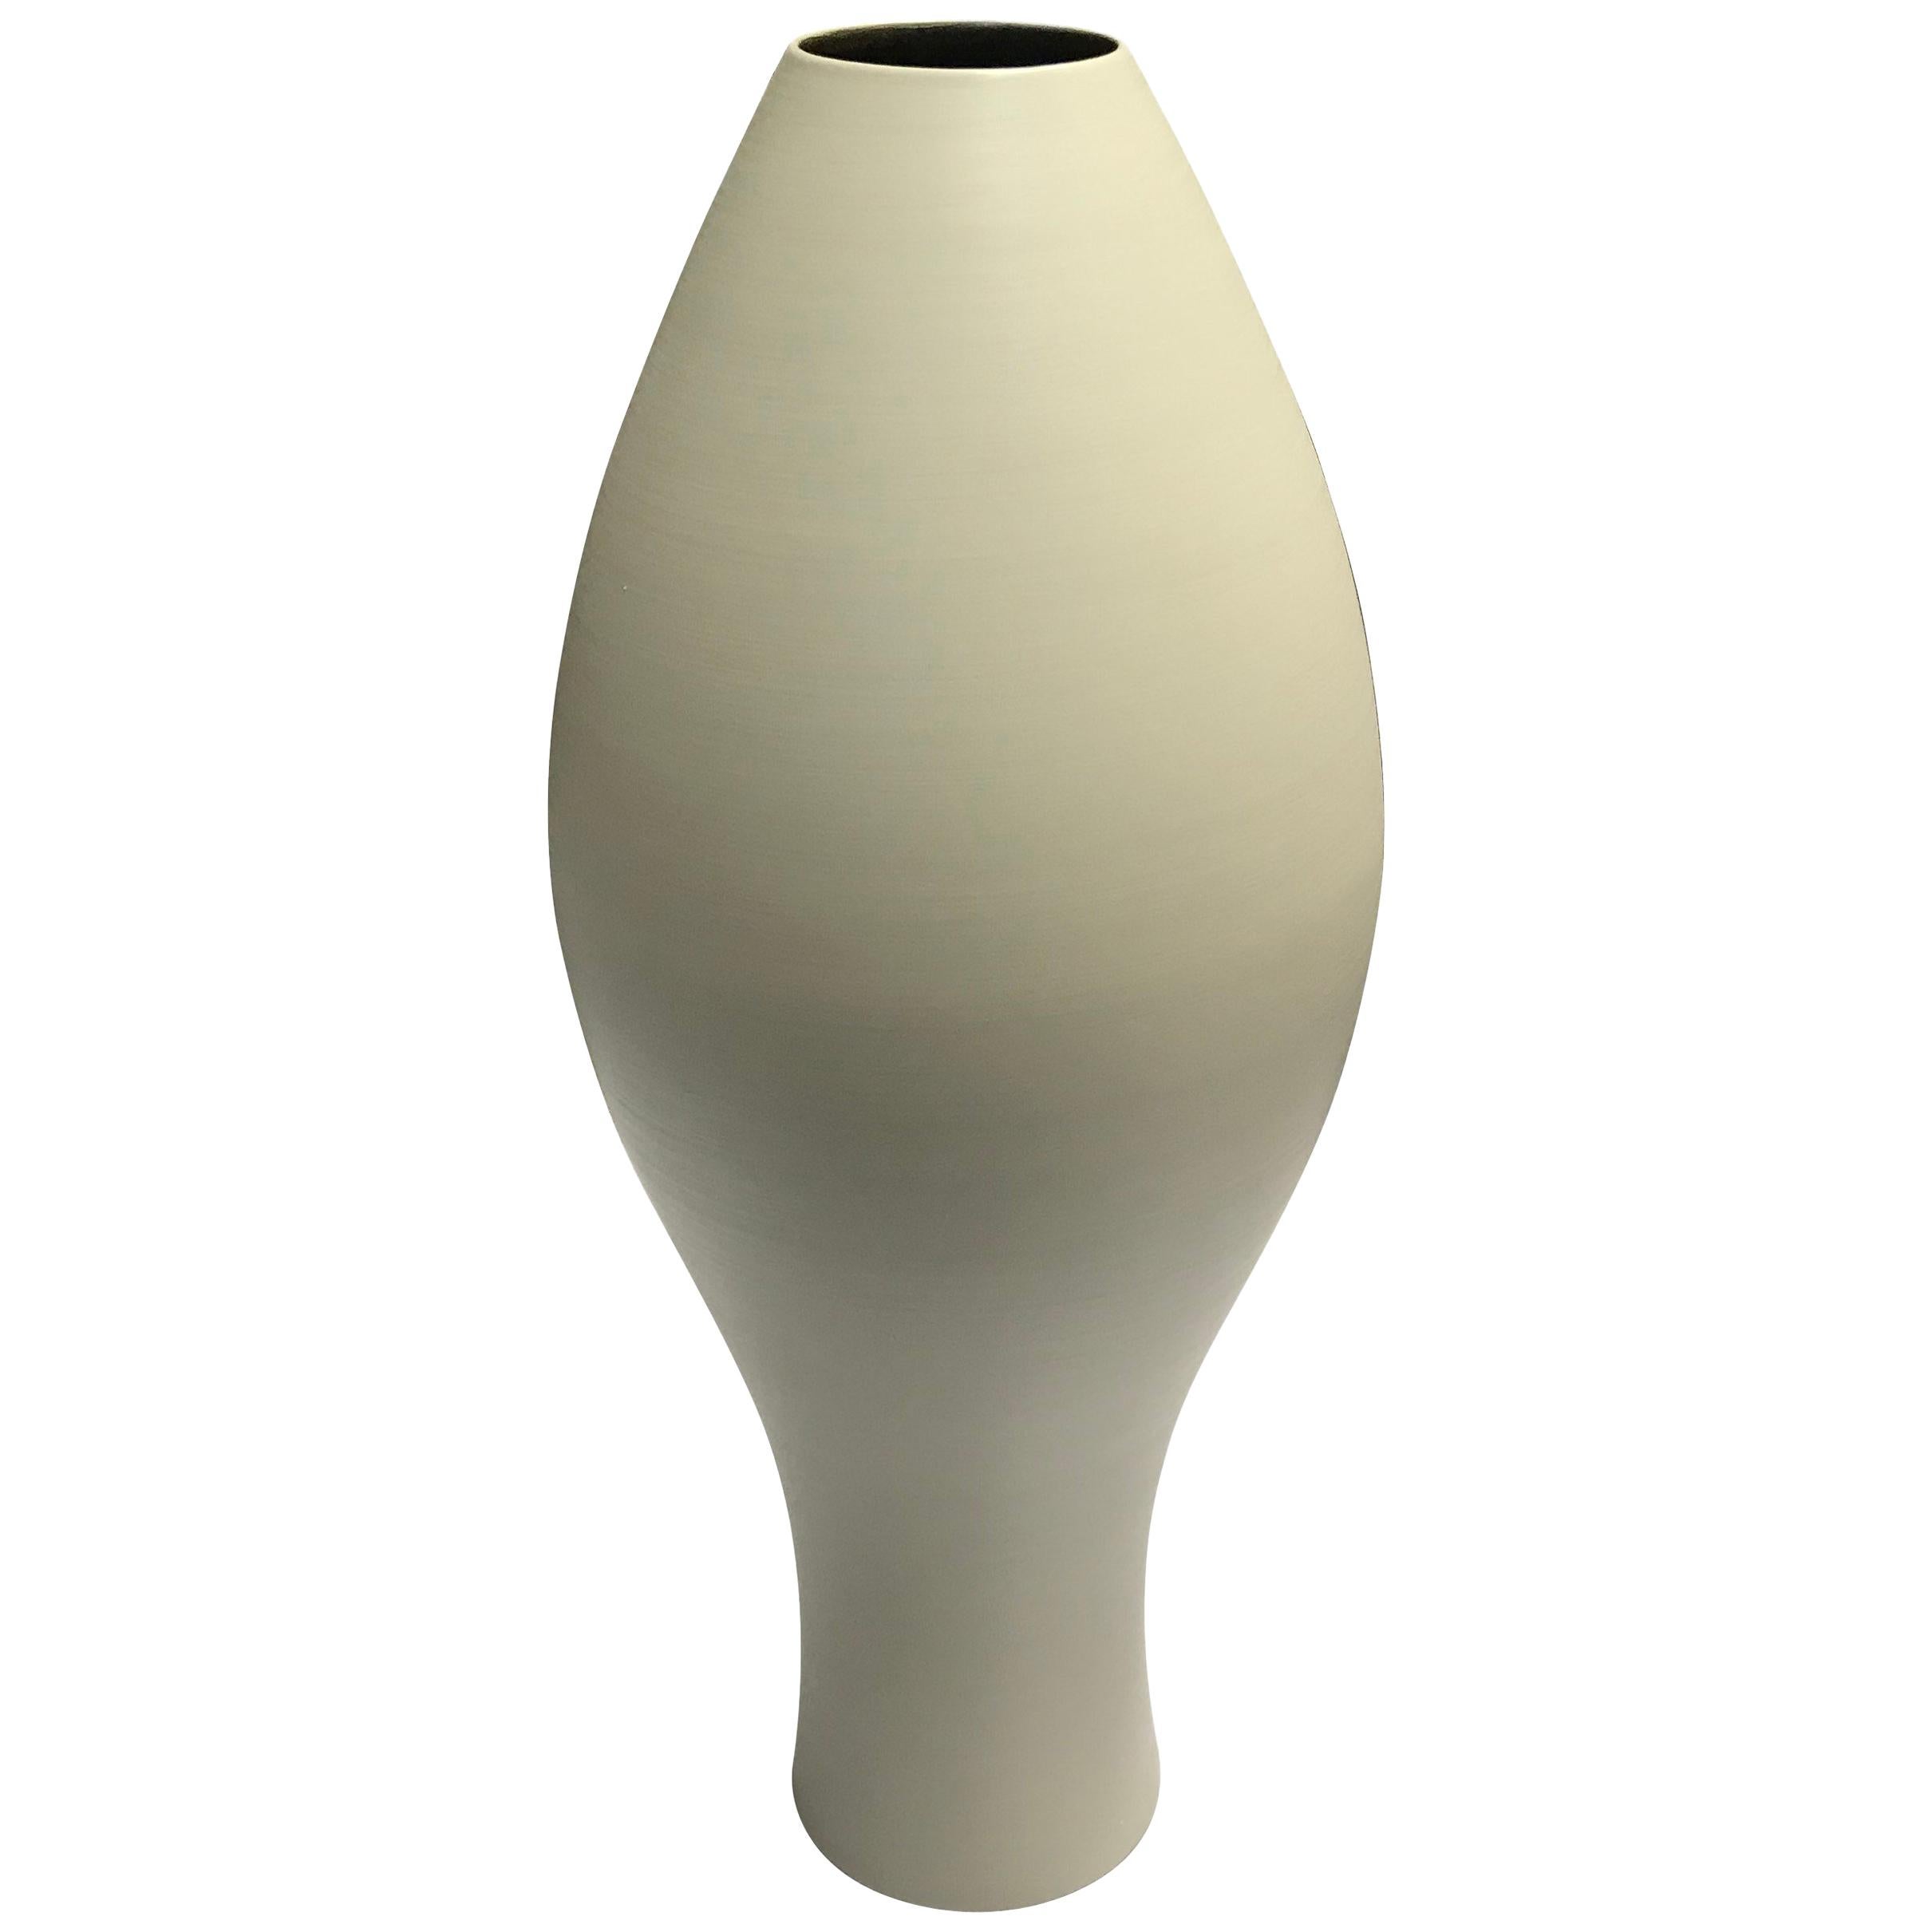 Curved Shape Fine Ceramic Extra Large Vase, Italy, Contemporary